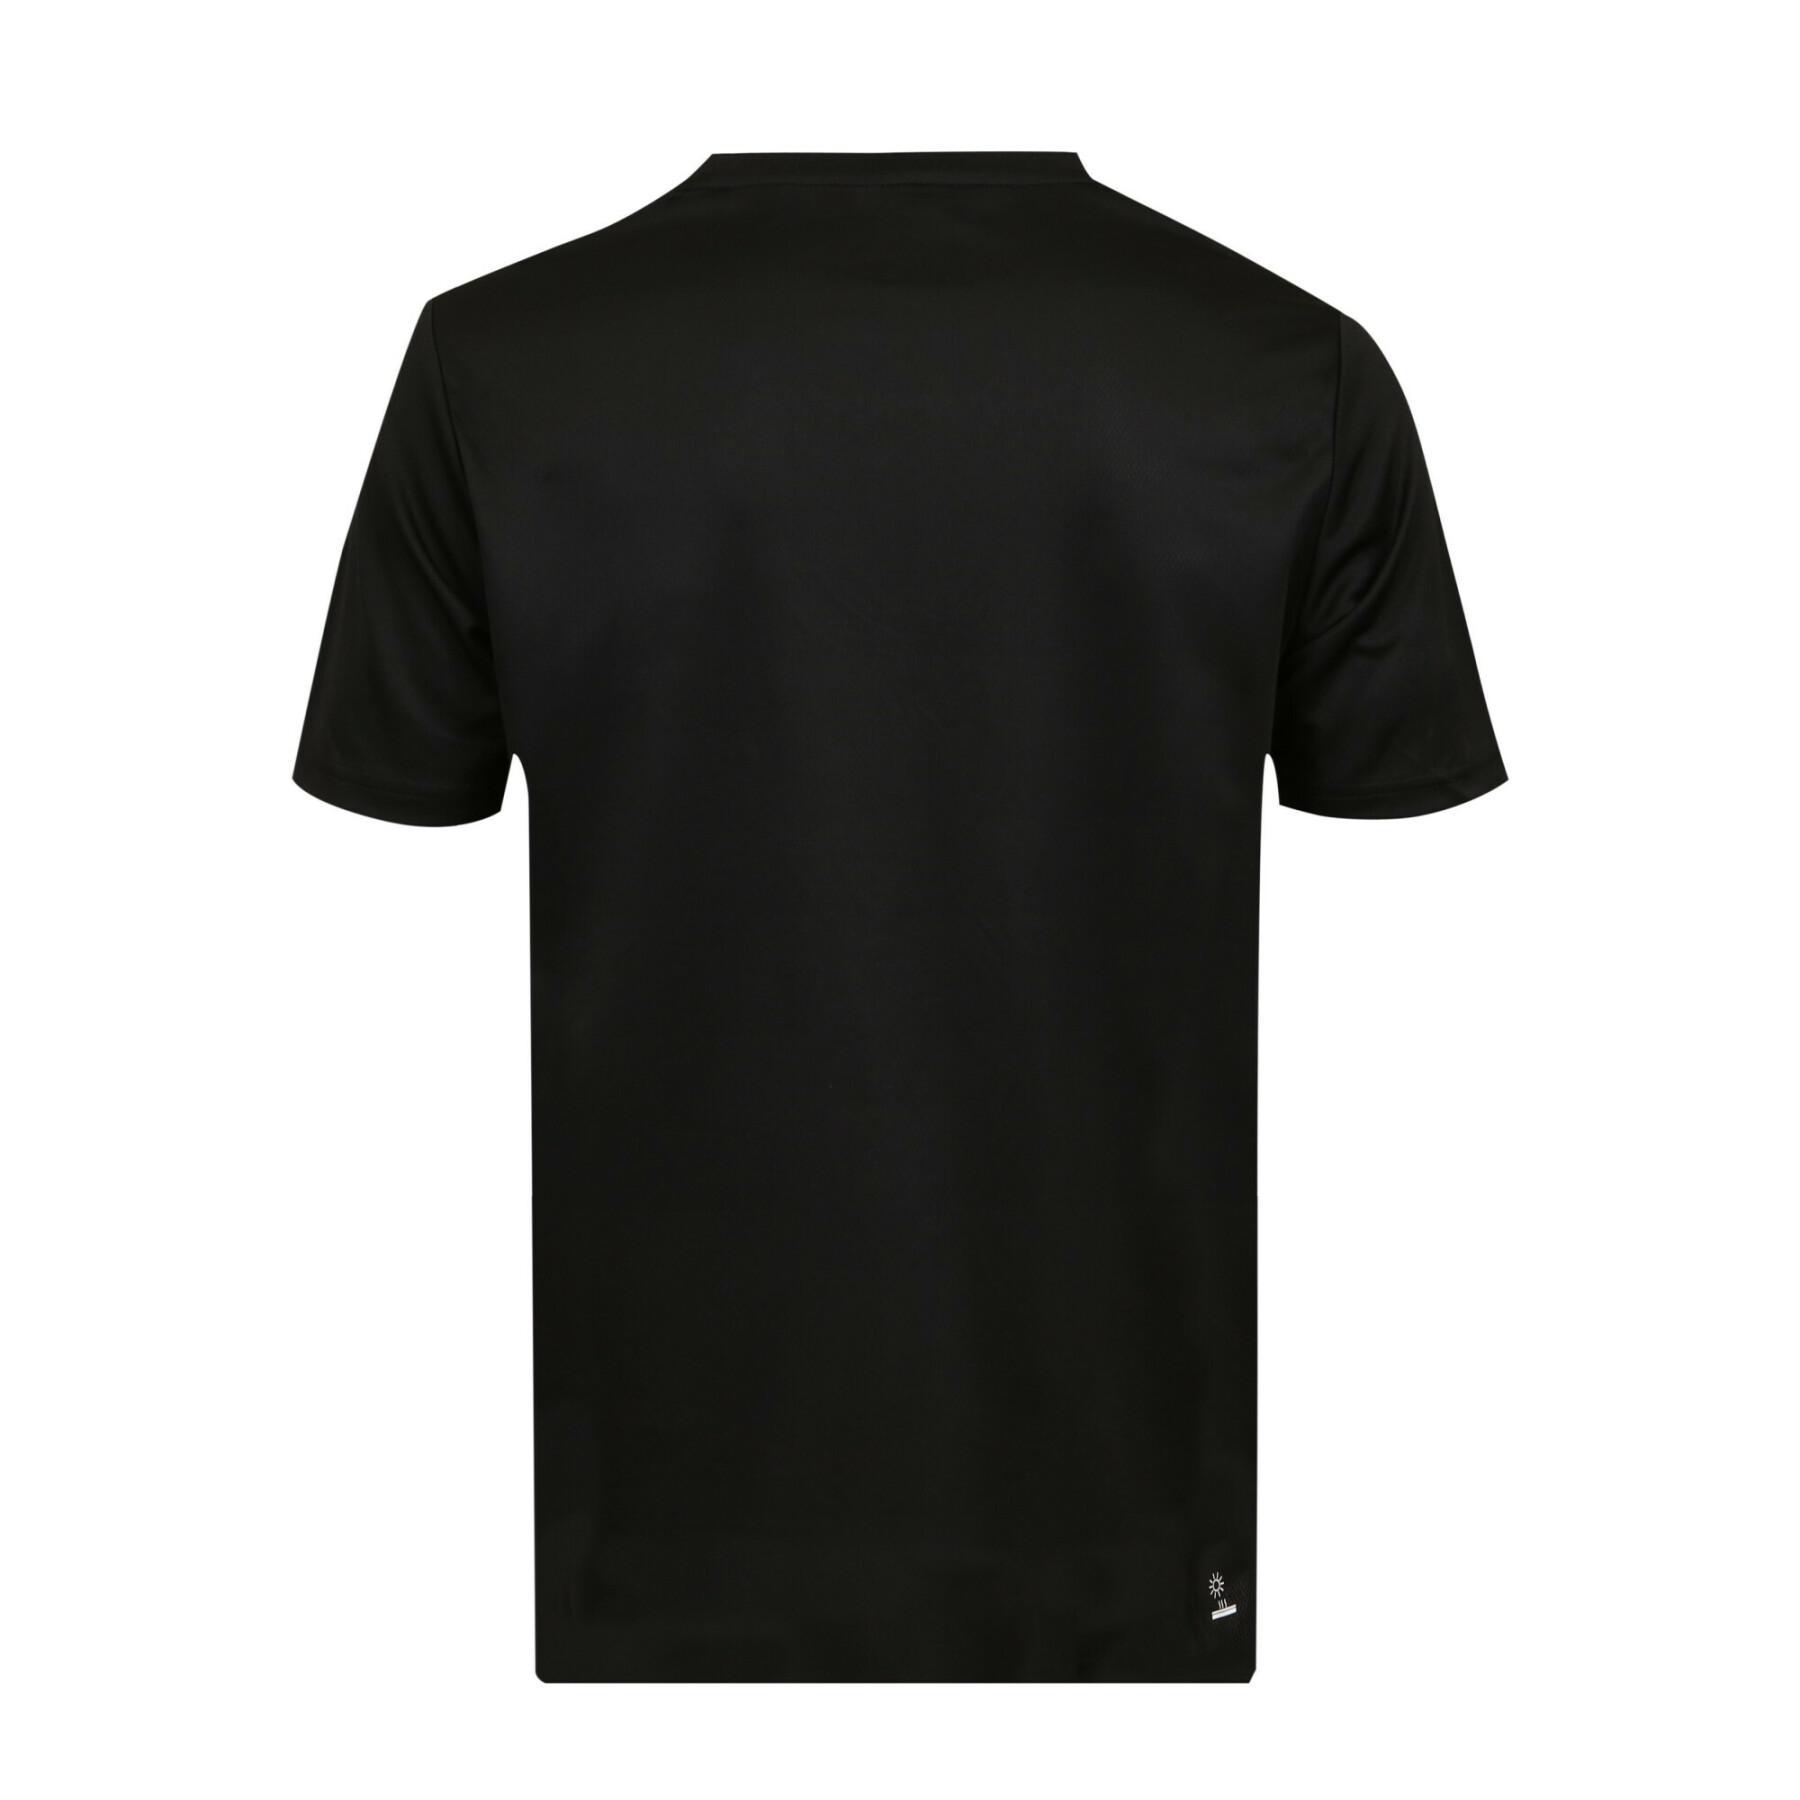 Short sleeve T-shirt Umbro League